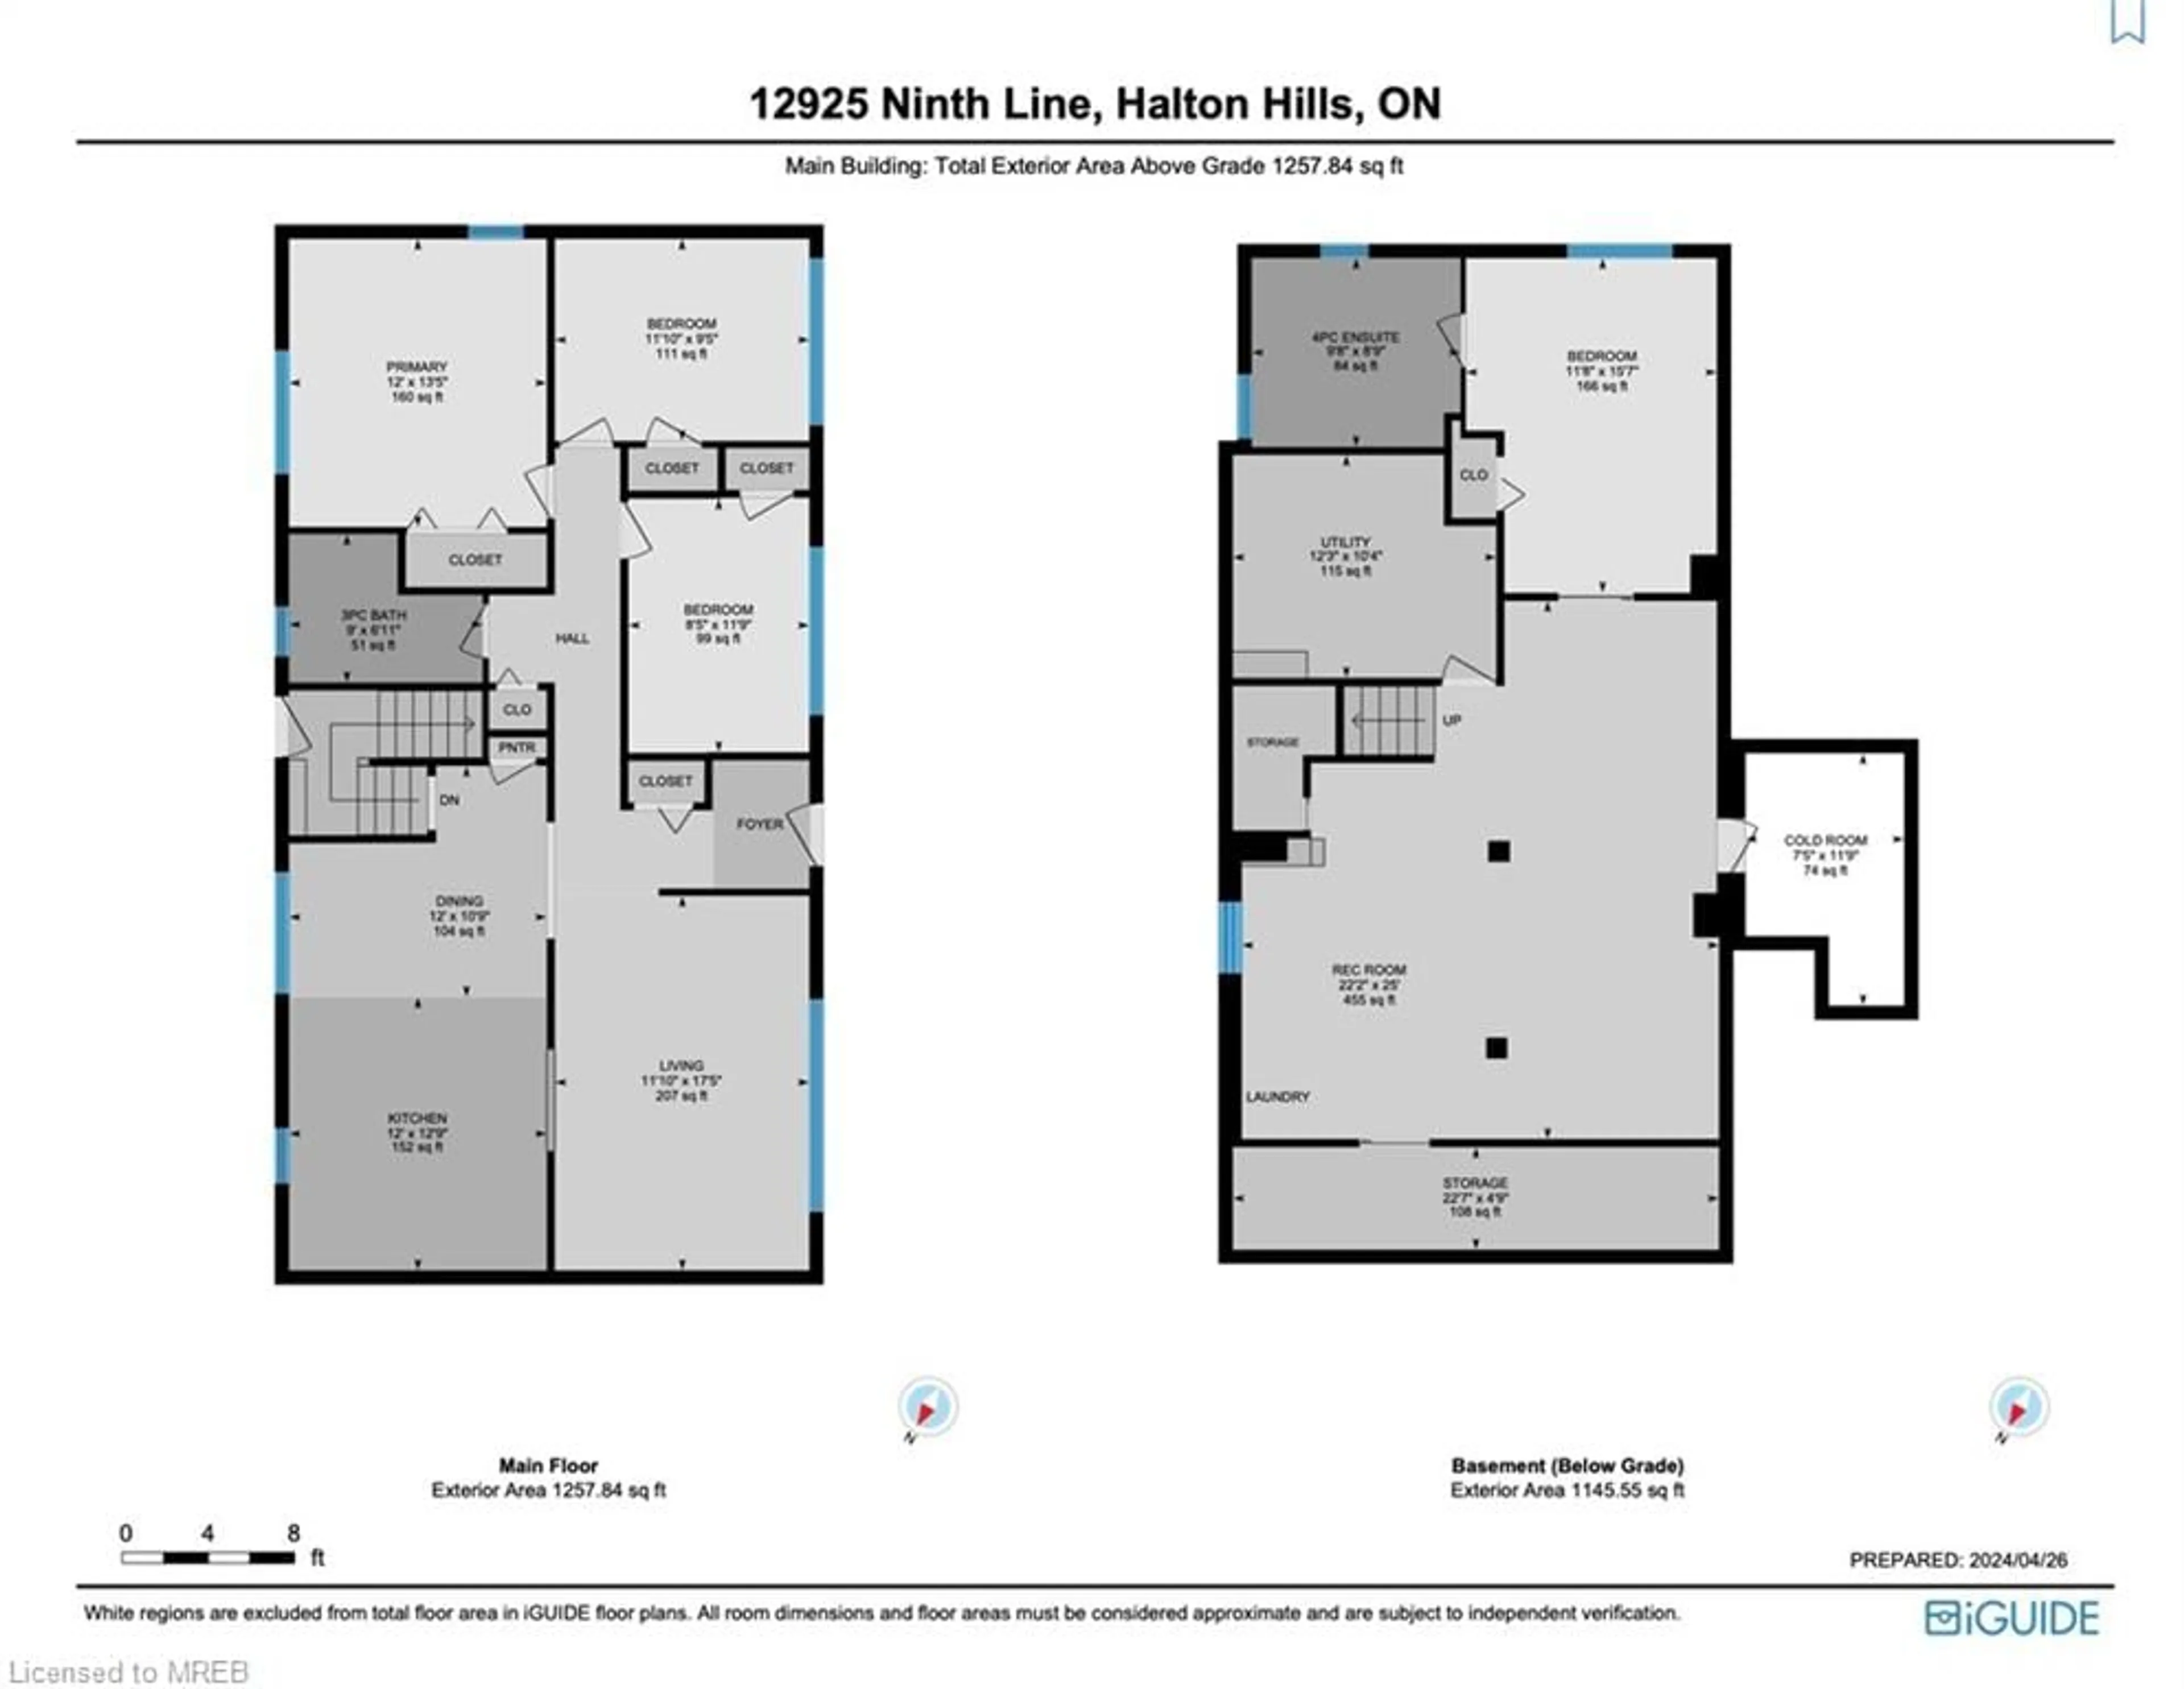 Floor plan for 12925 Ninth Line, Halton Hills Ontario L7G 4S8